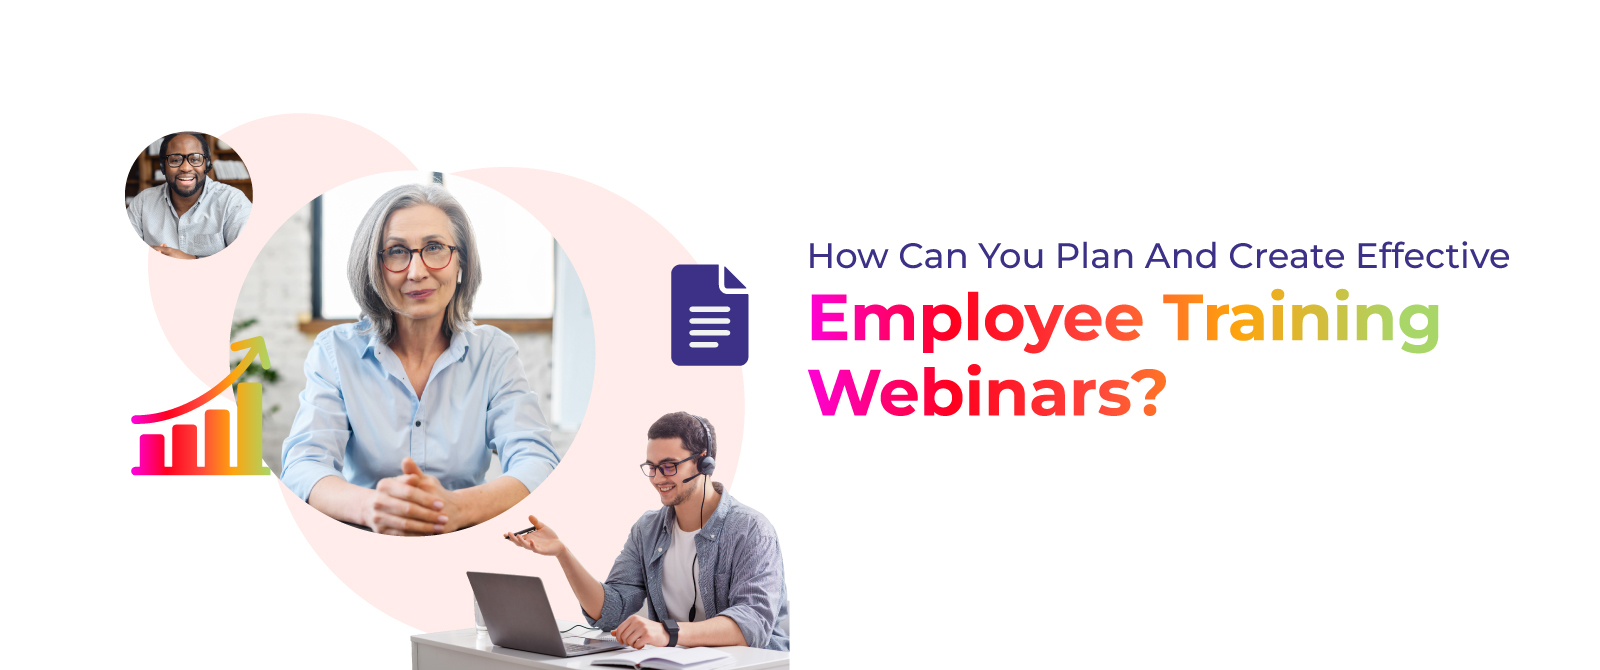 How Can You Plan and Create Effective Employee Training Webinars?